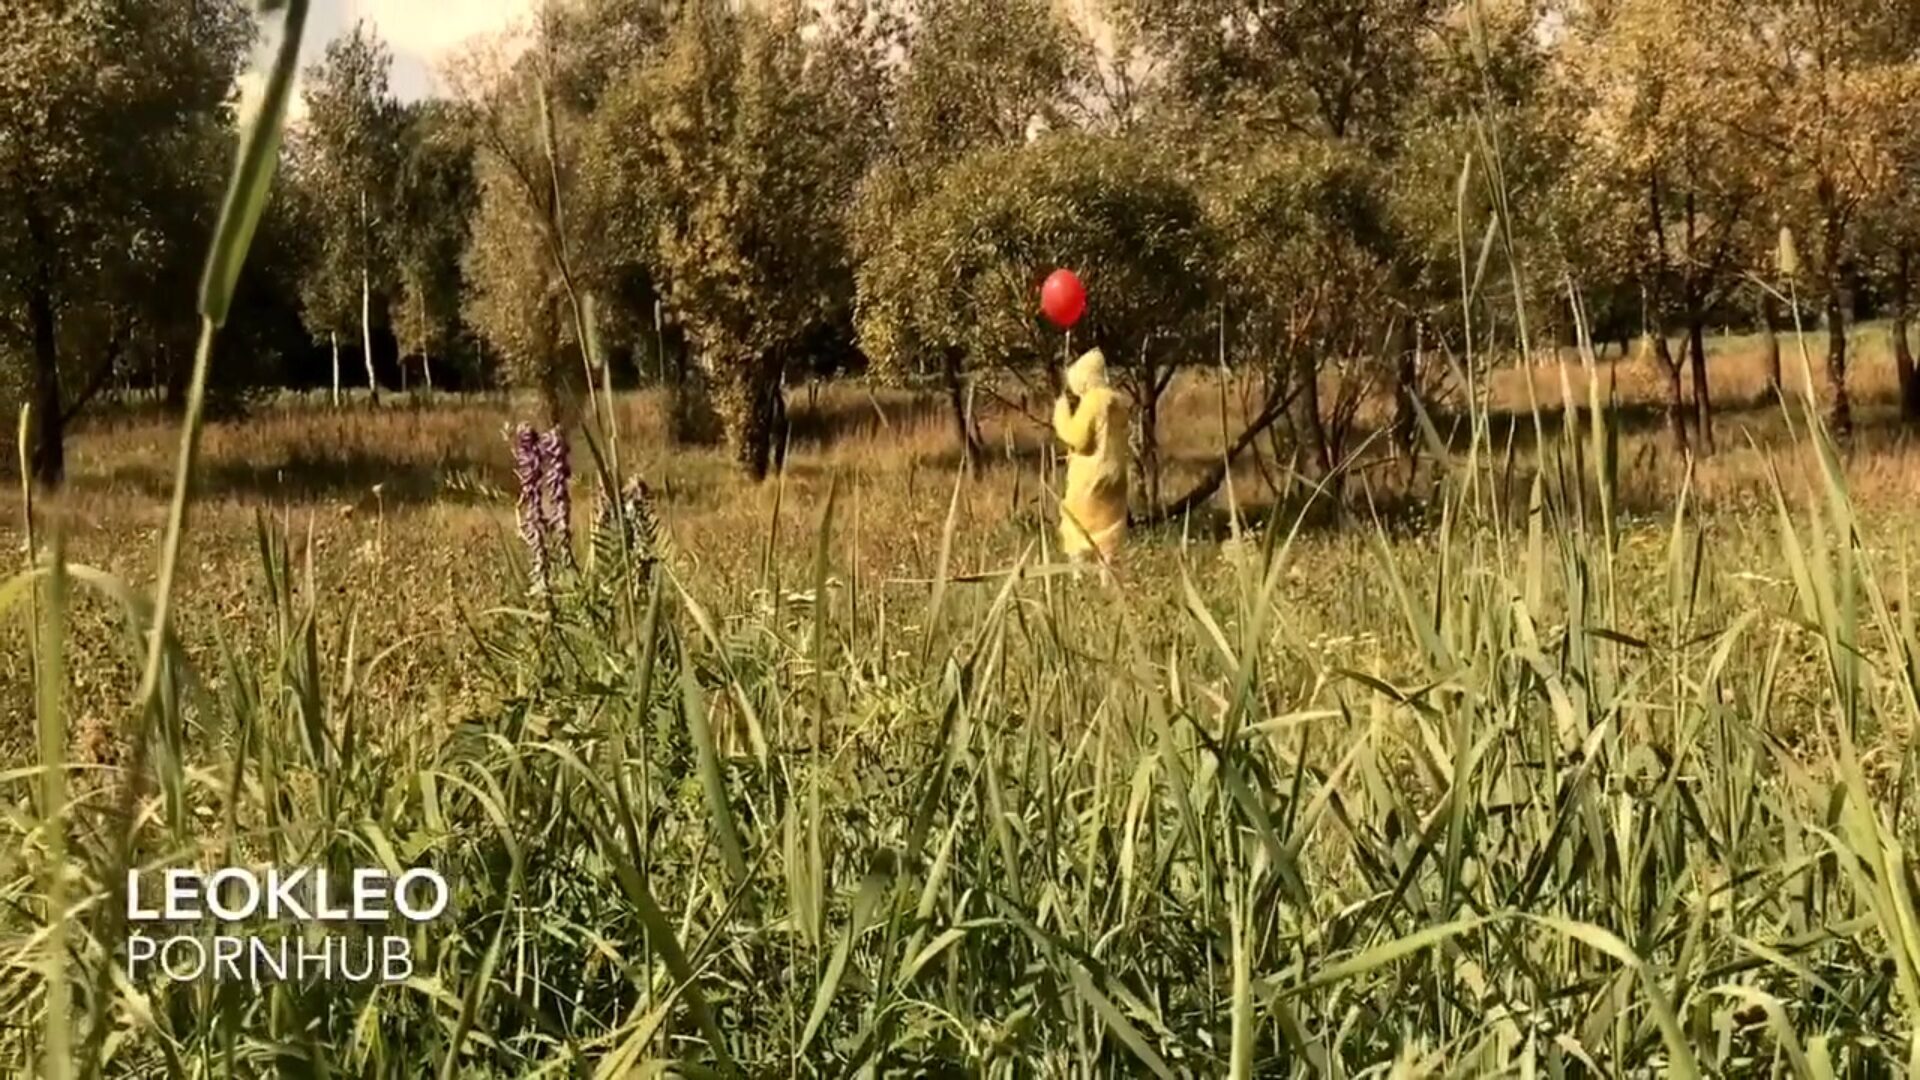 beverly marsh fuck public outdoor klaun pennywise teen cosplay leokleo